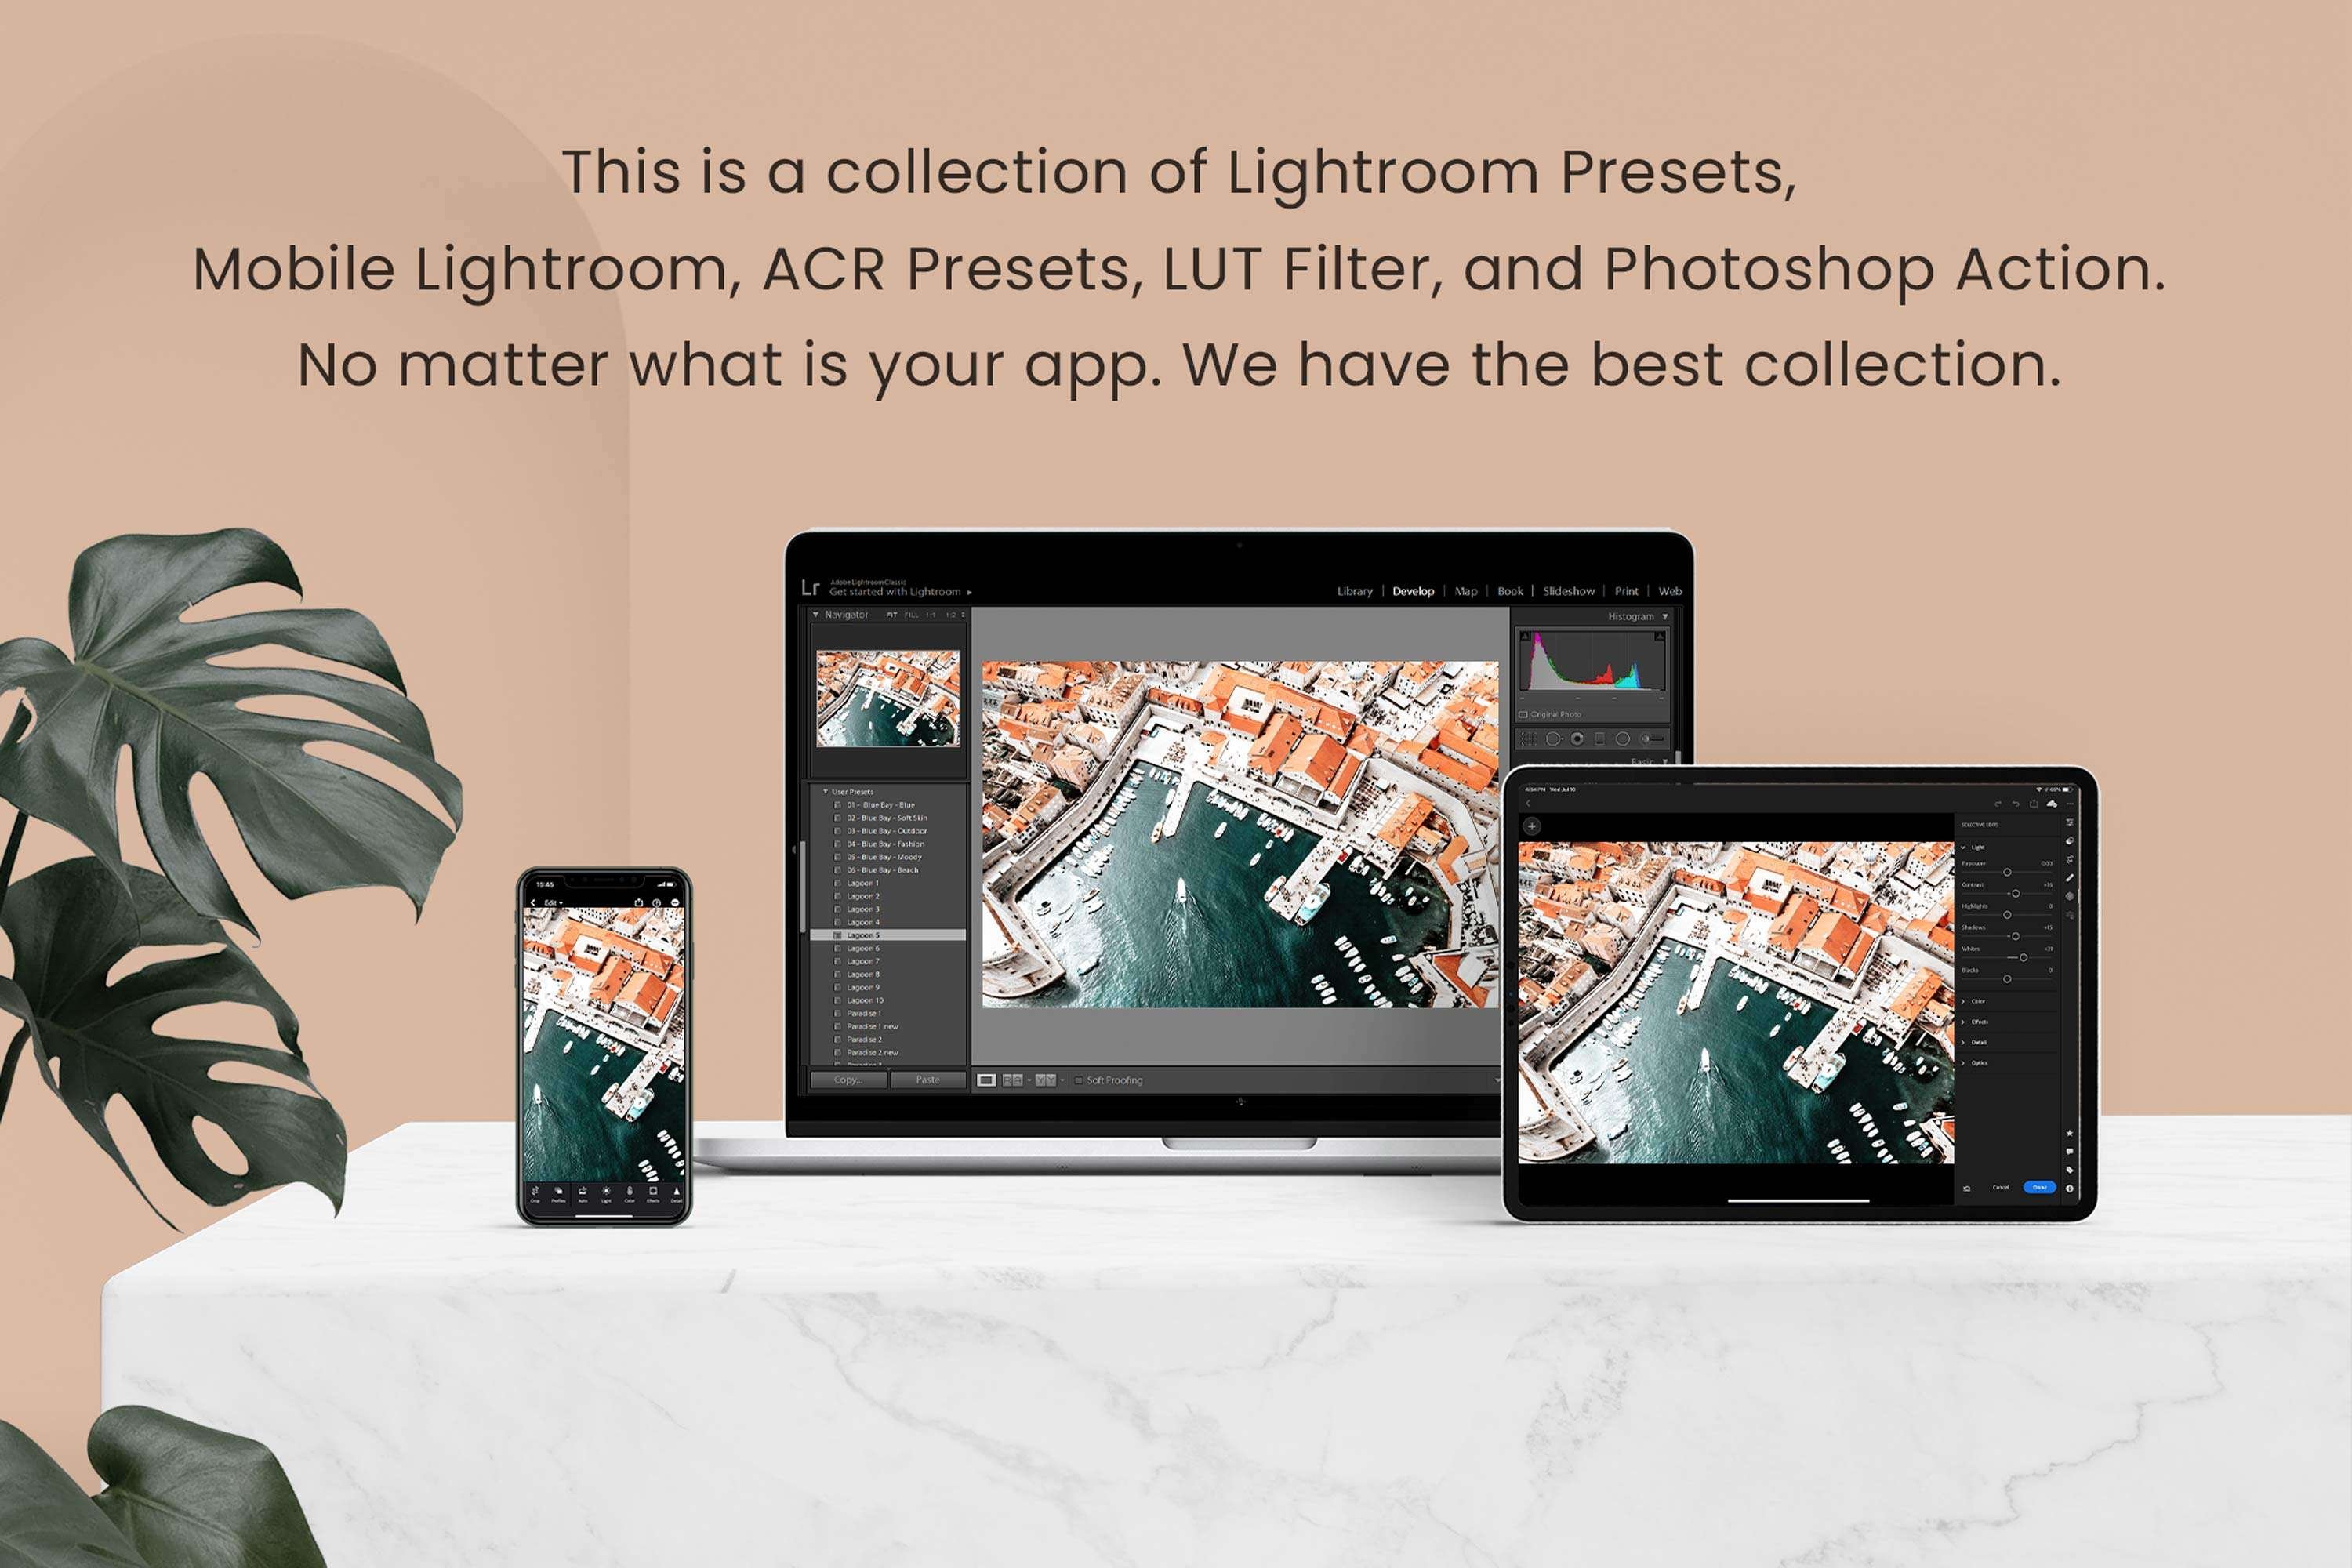 Capri Lightroom Presets Desktoppreview image.